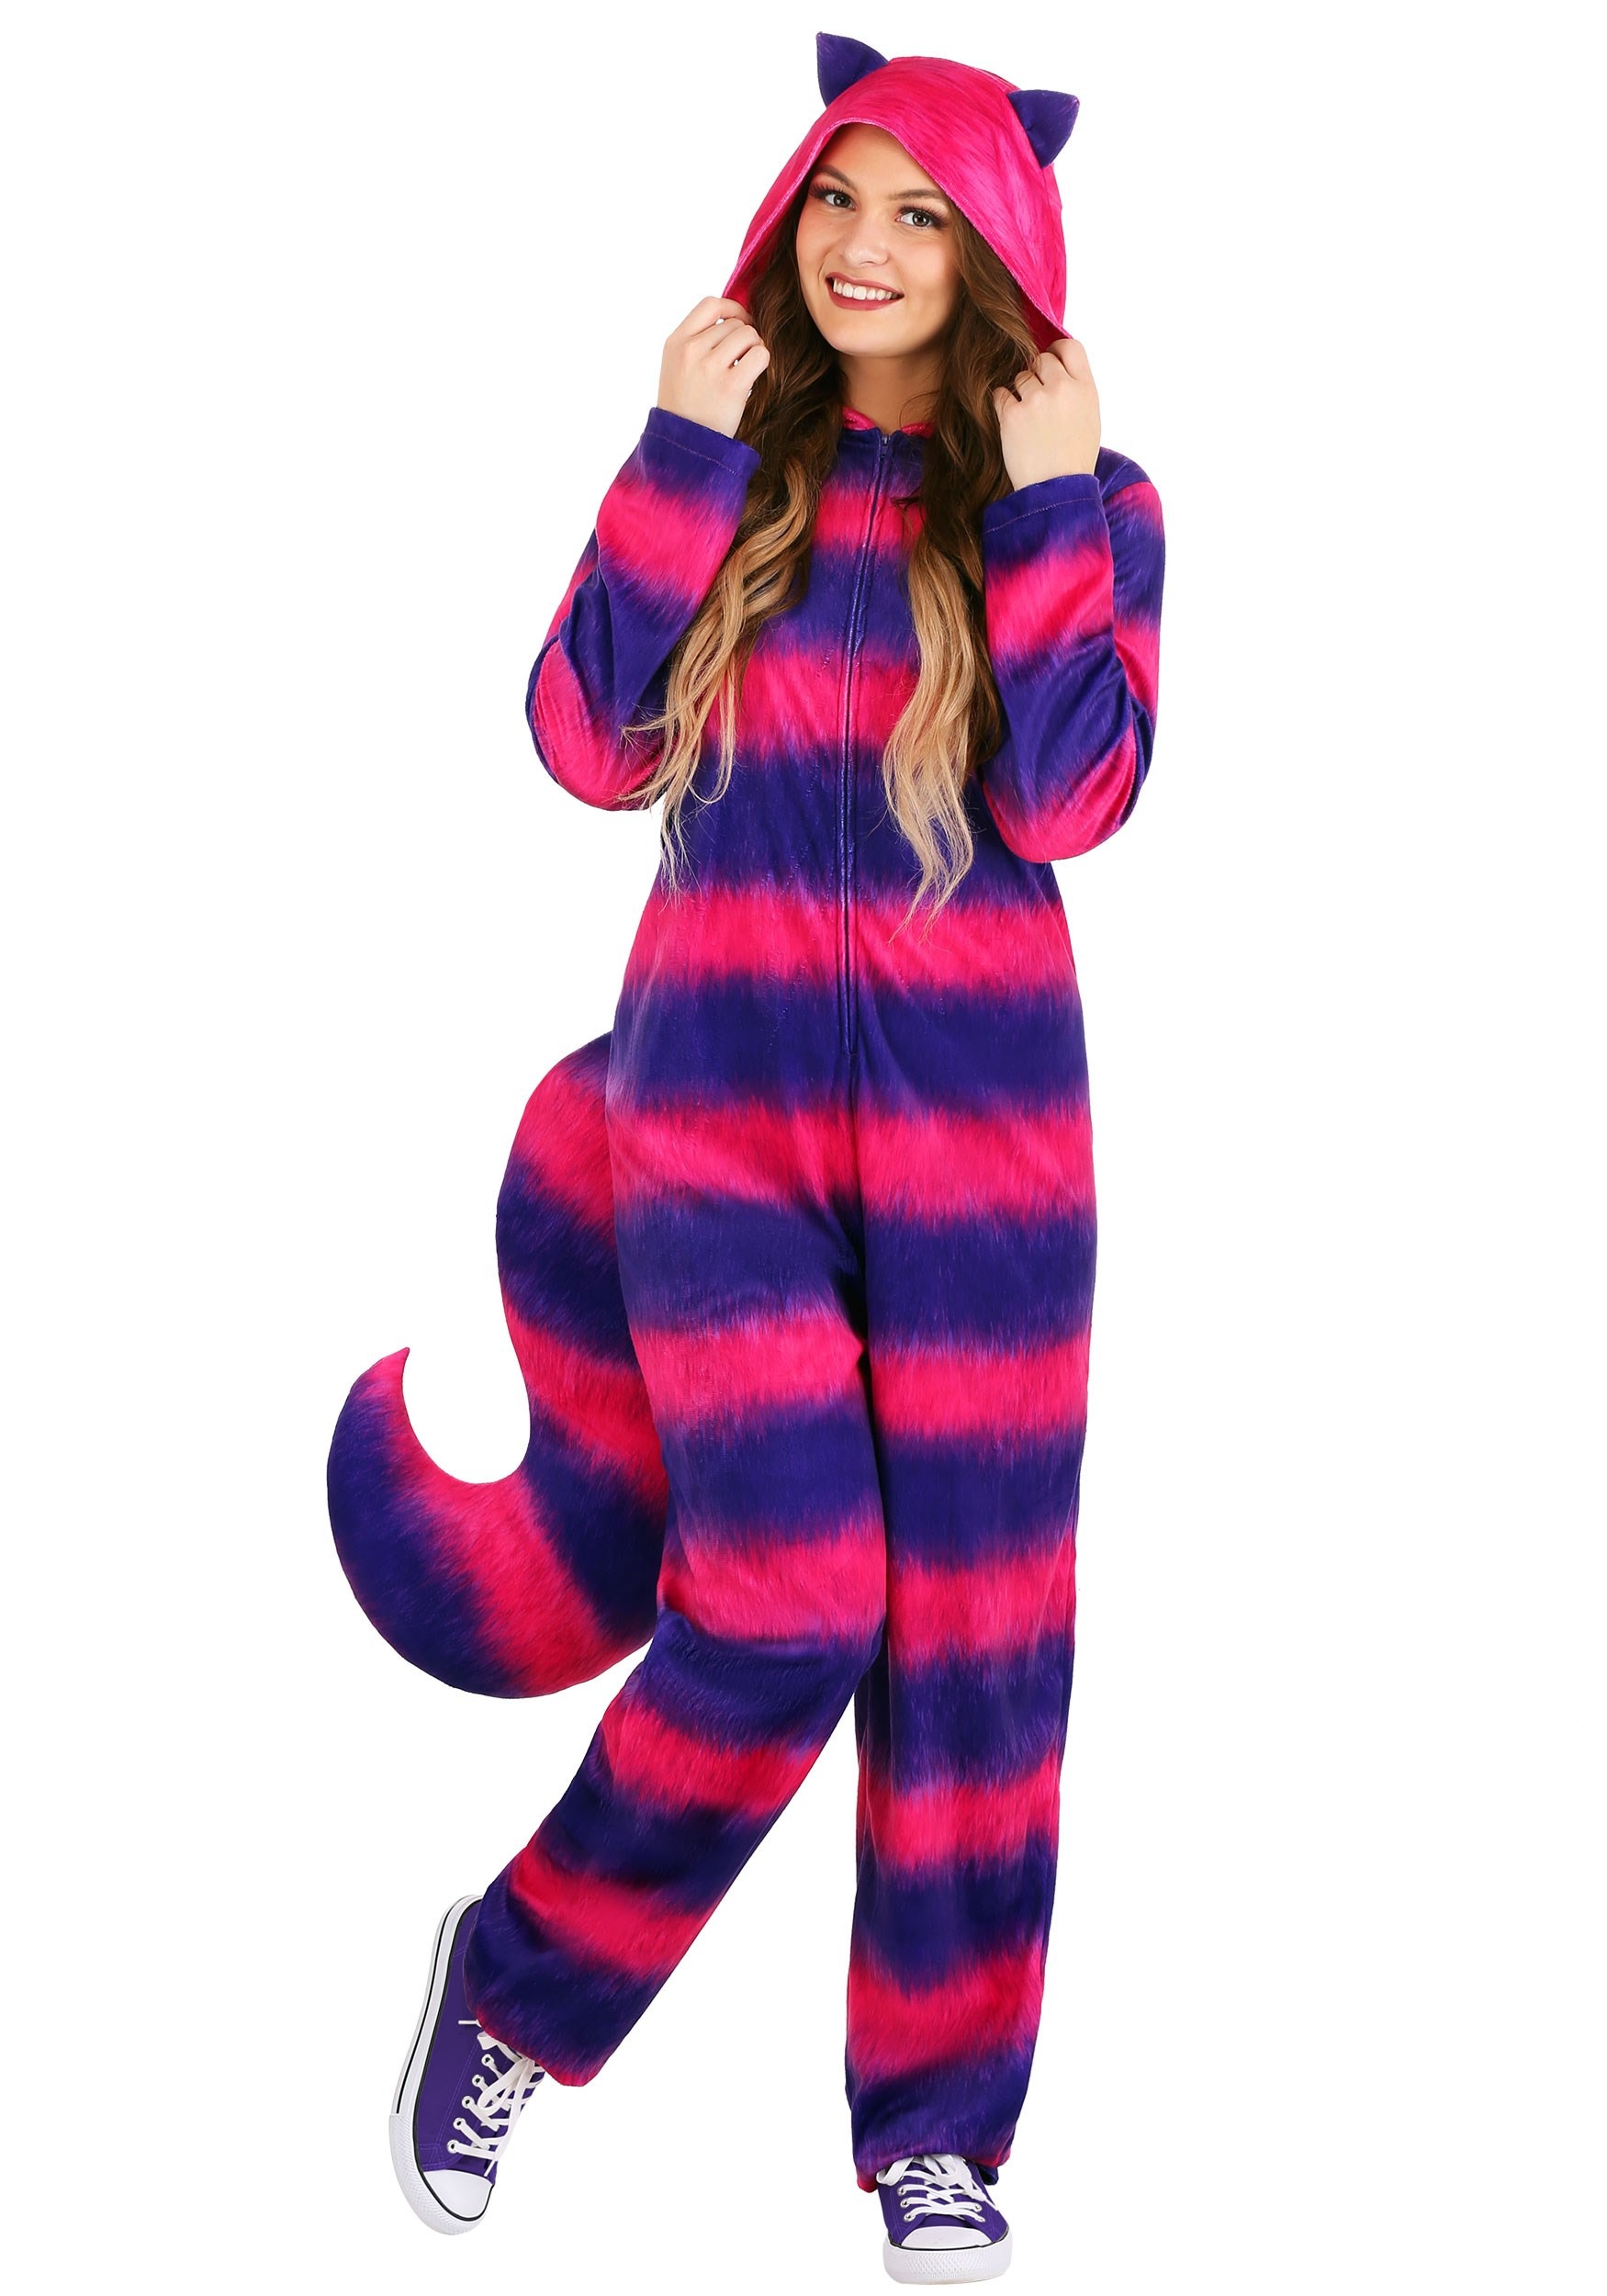 Photos - Fancy Dress CATerpillar FUN Costumes Cheshire Cat Costume Onesie for Adults | Alice in Wonderland 